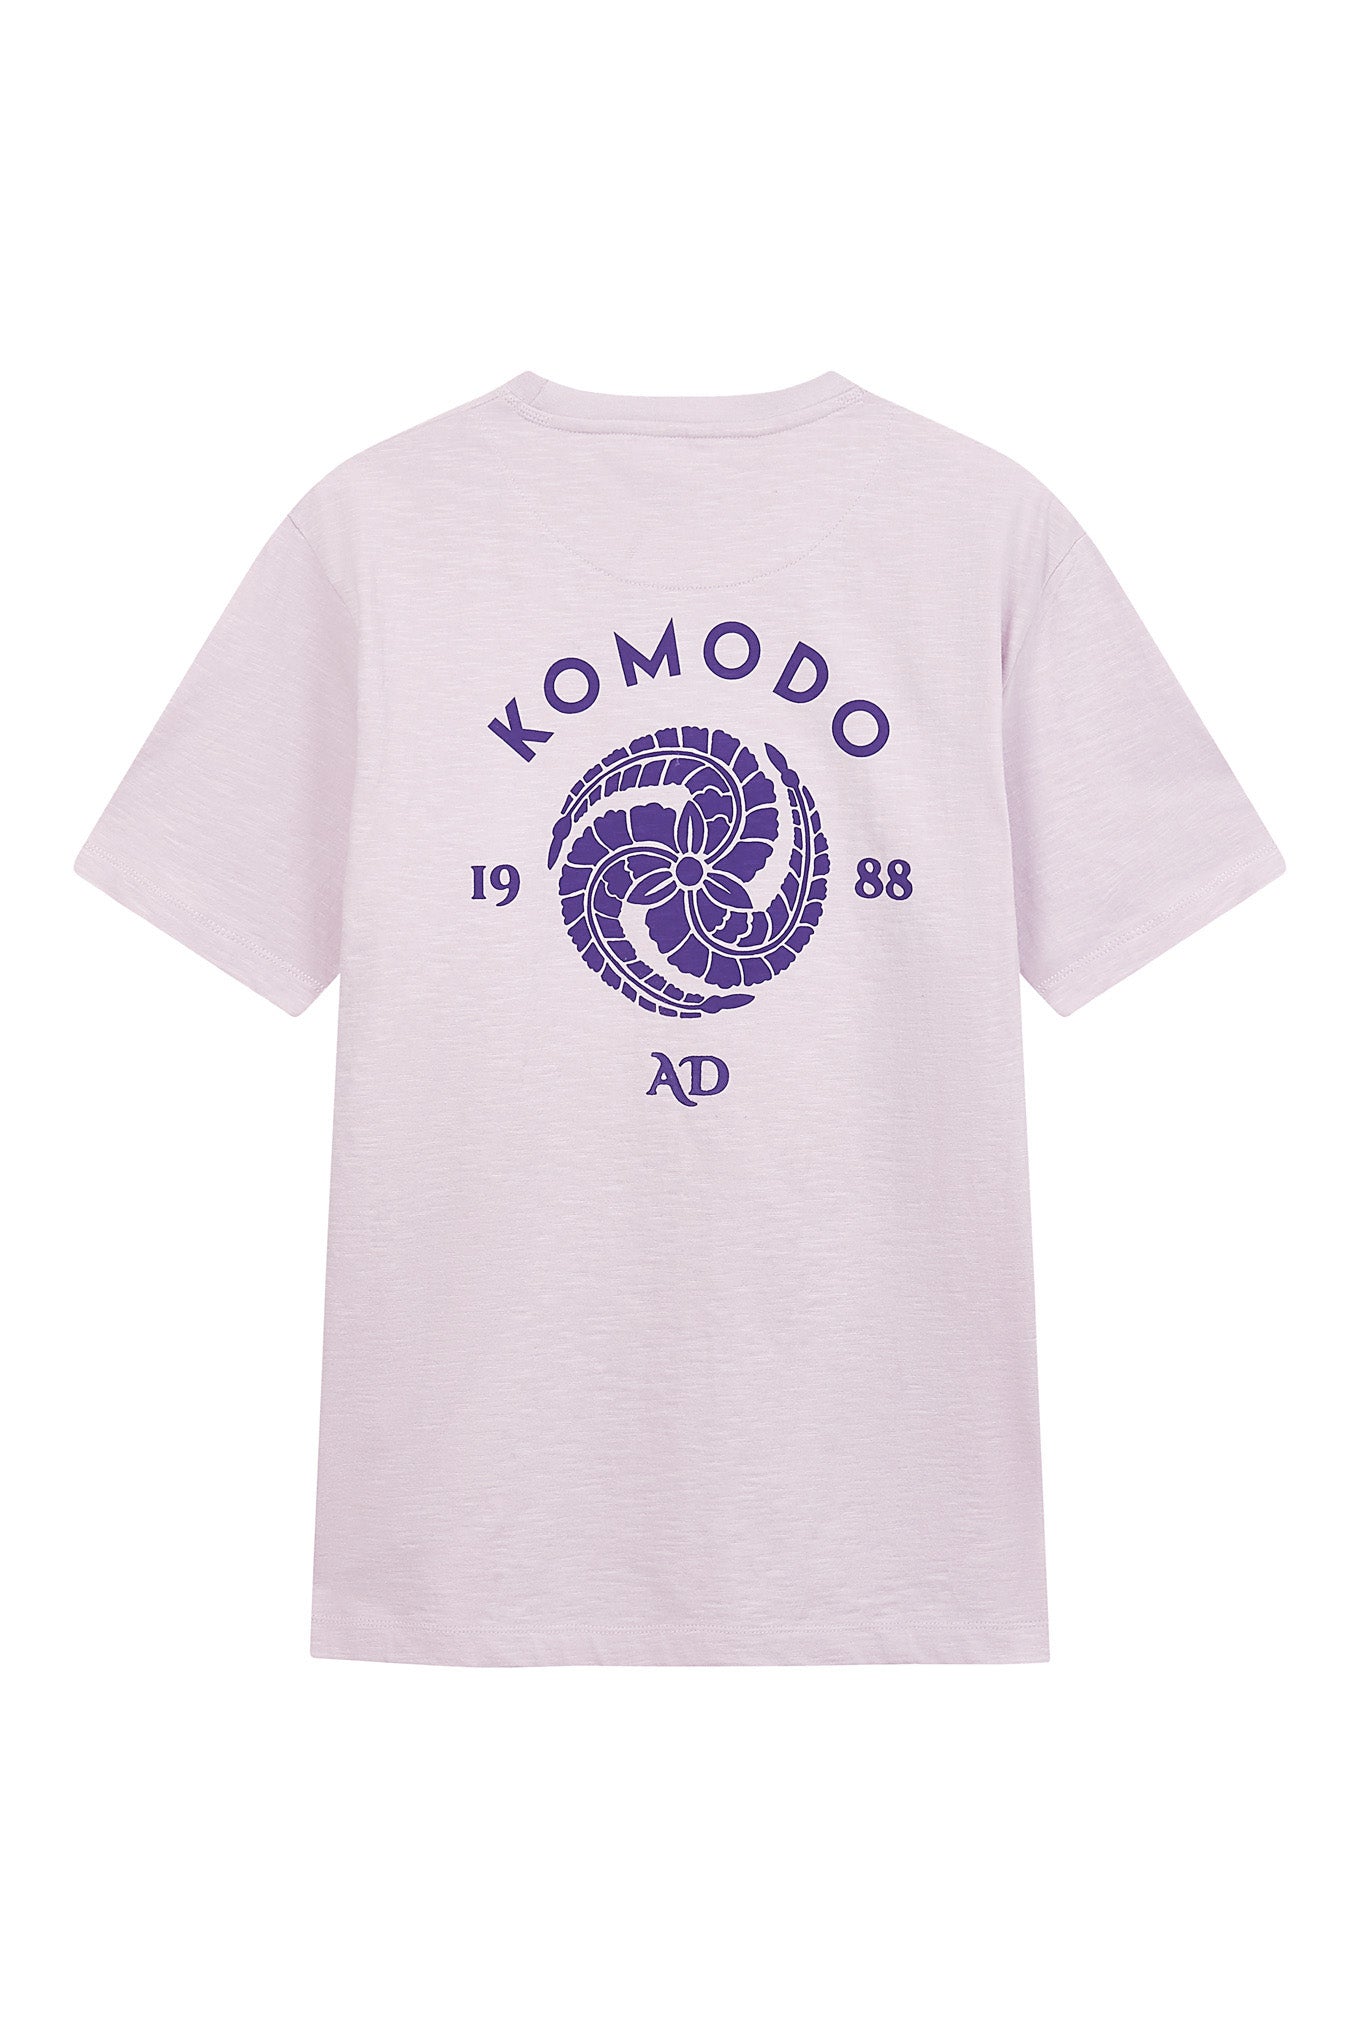 Pink CREST organic cotton T-shirt from Komodo